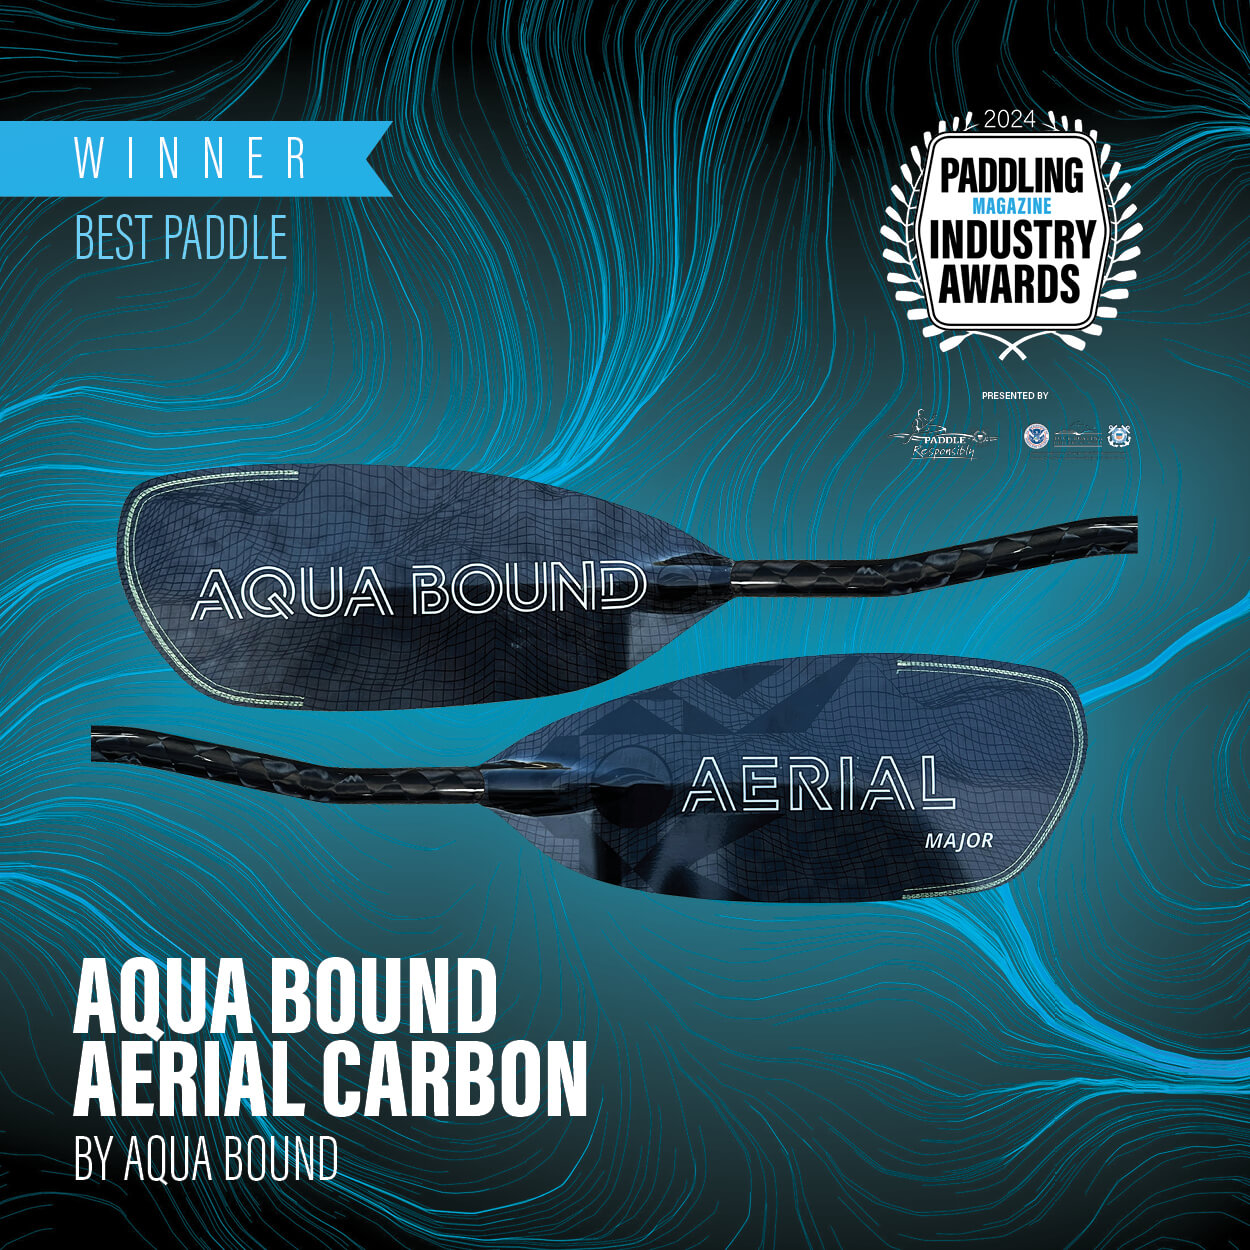 Aerial Major Carbon 1-Piece Crank Shaft Kayak Paddle